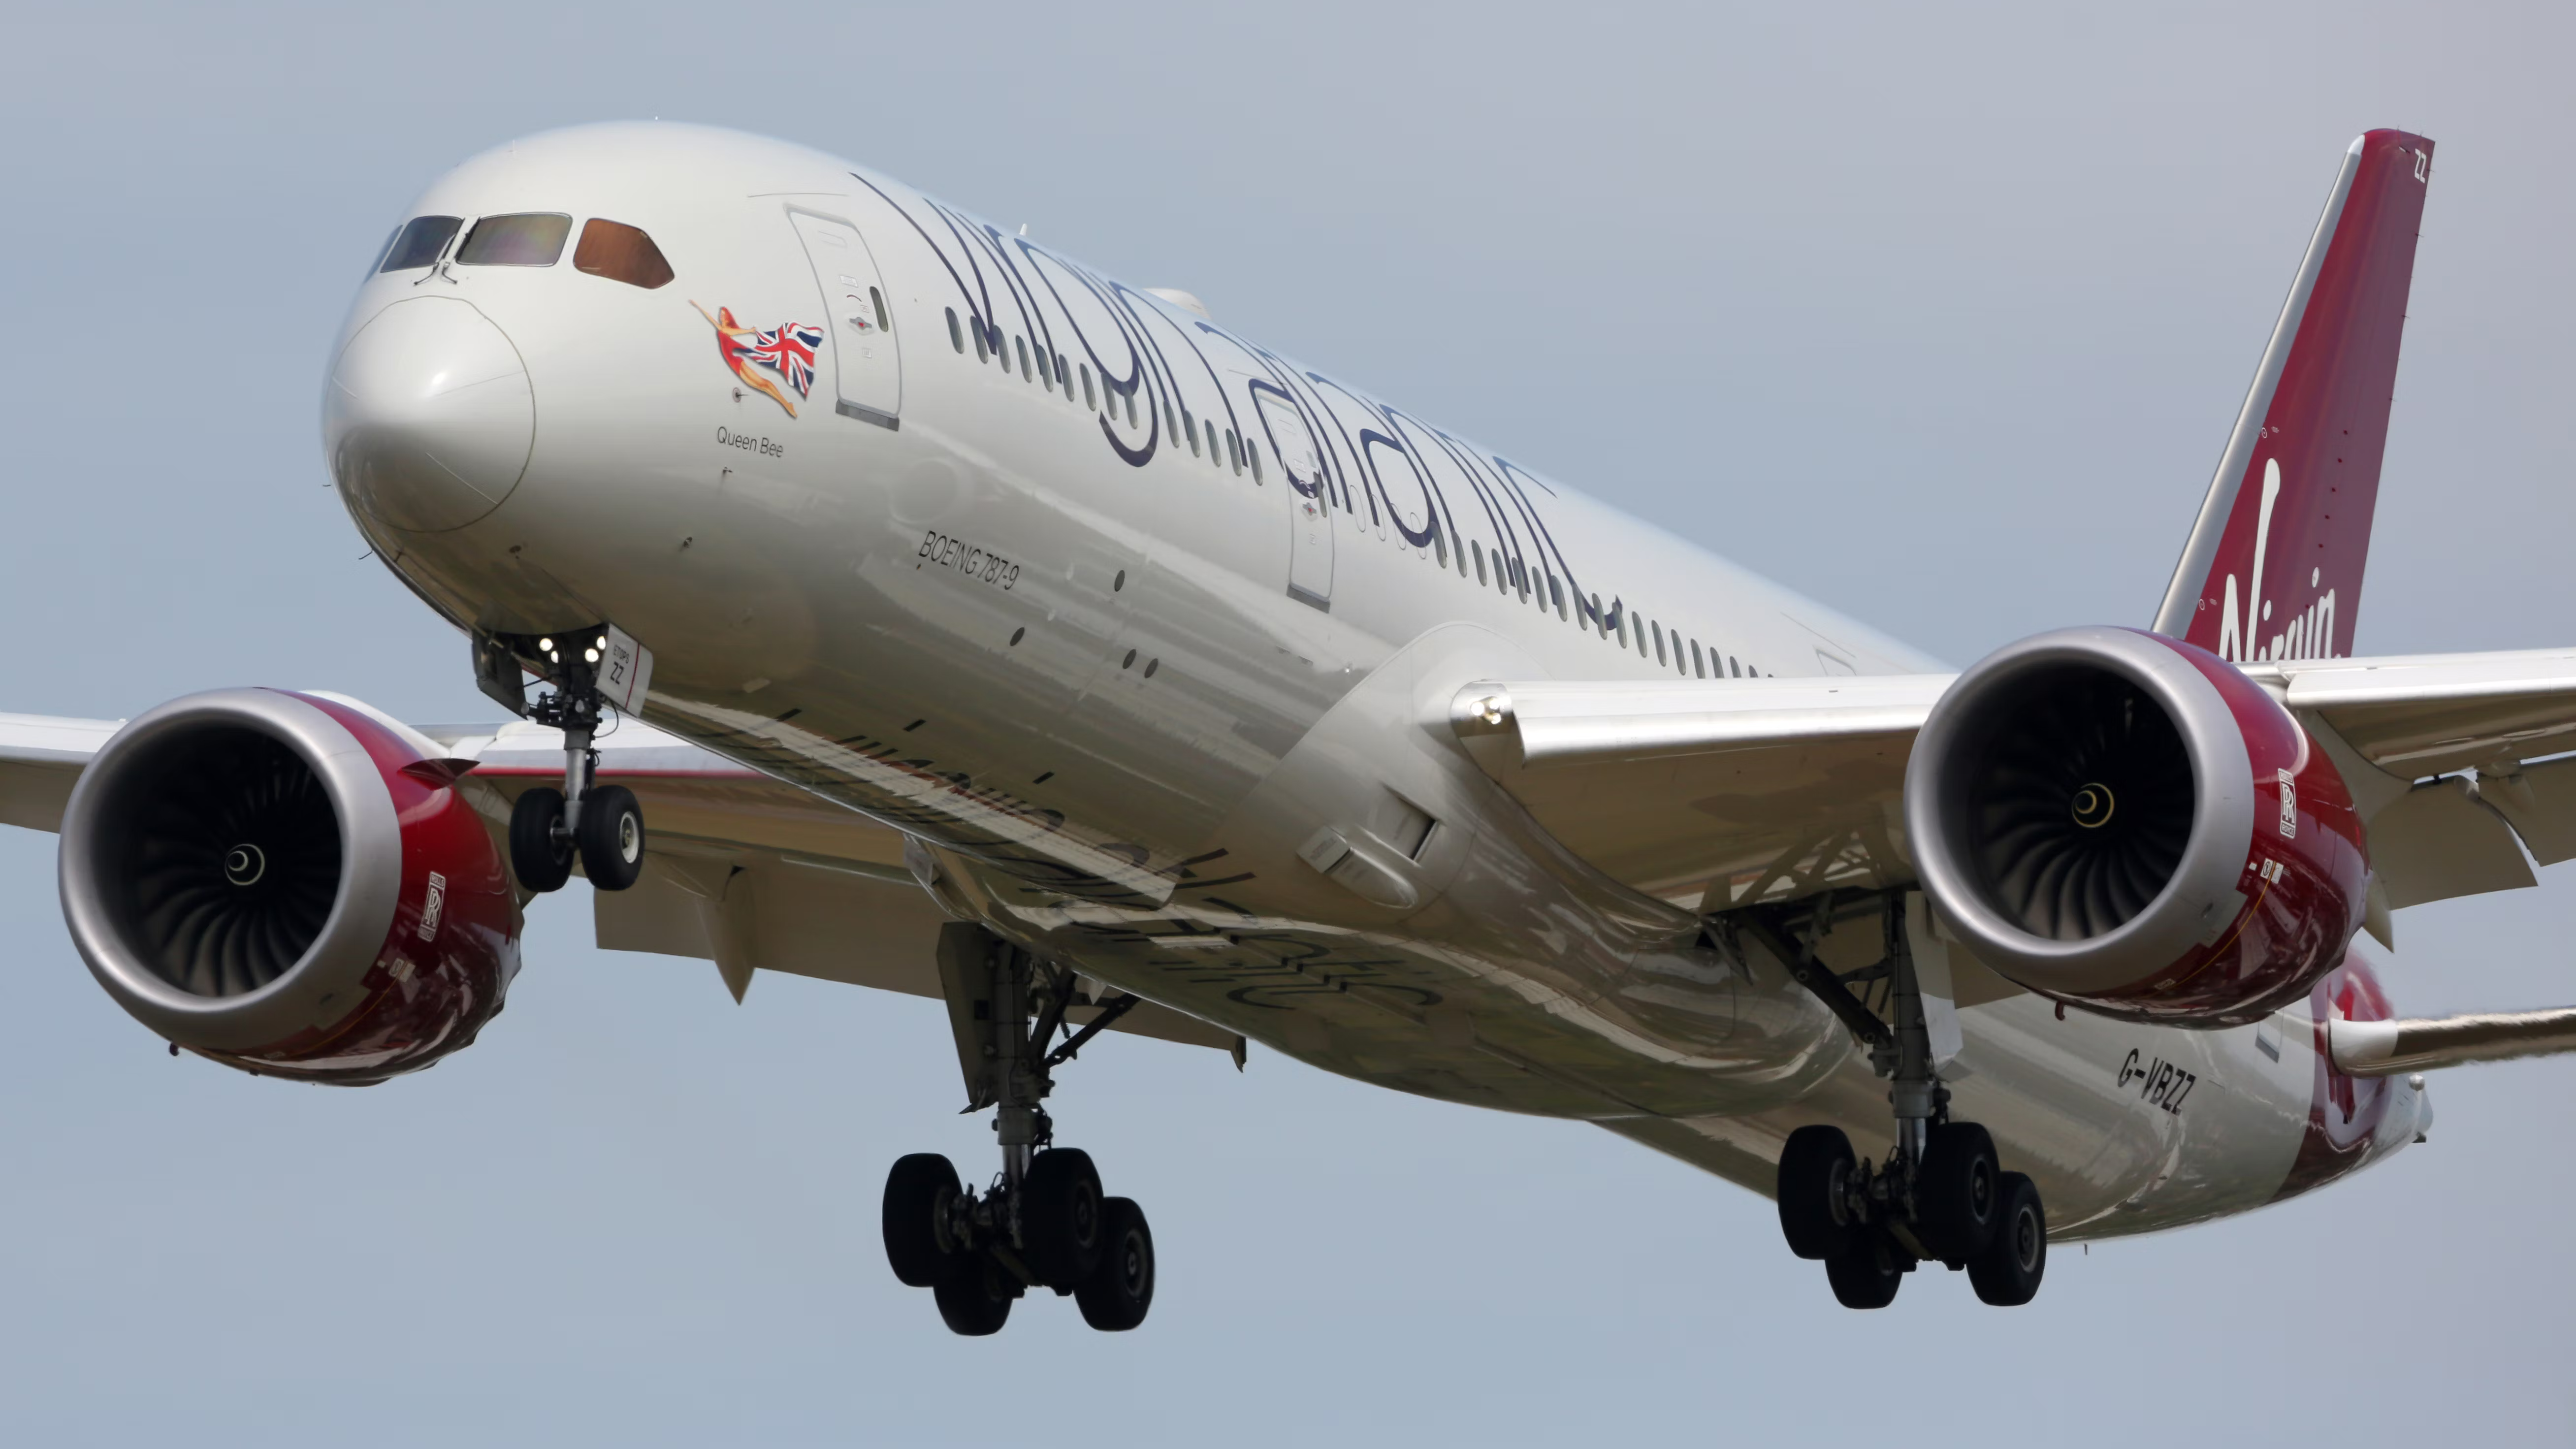 A Virgin Atlantic Boeing 787-9 landing at London Heathrow Airport.